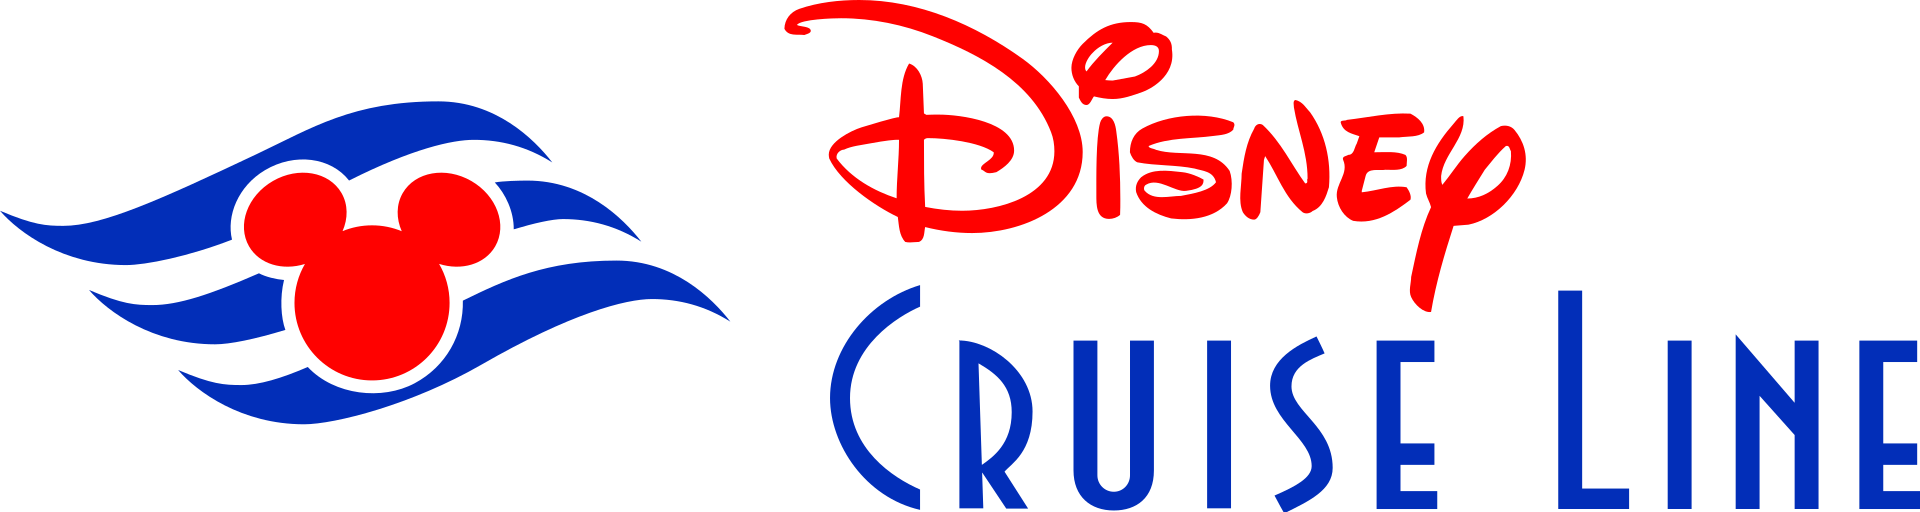 disney cruise line fantasy logo